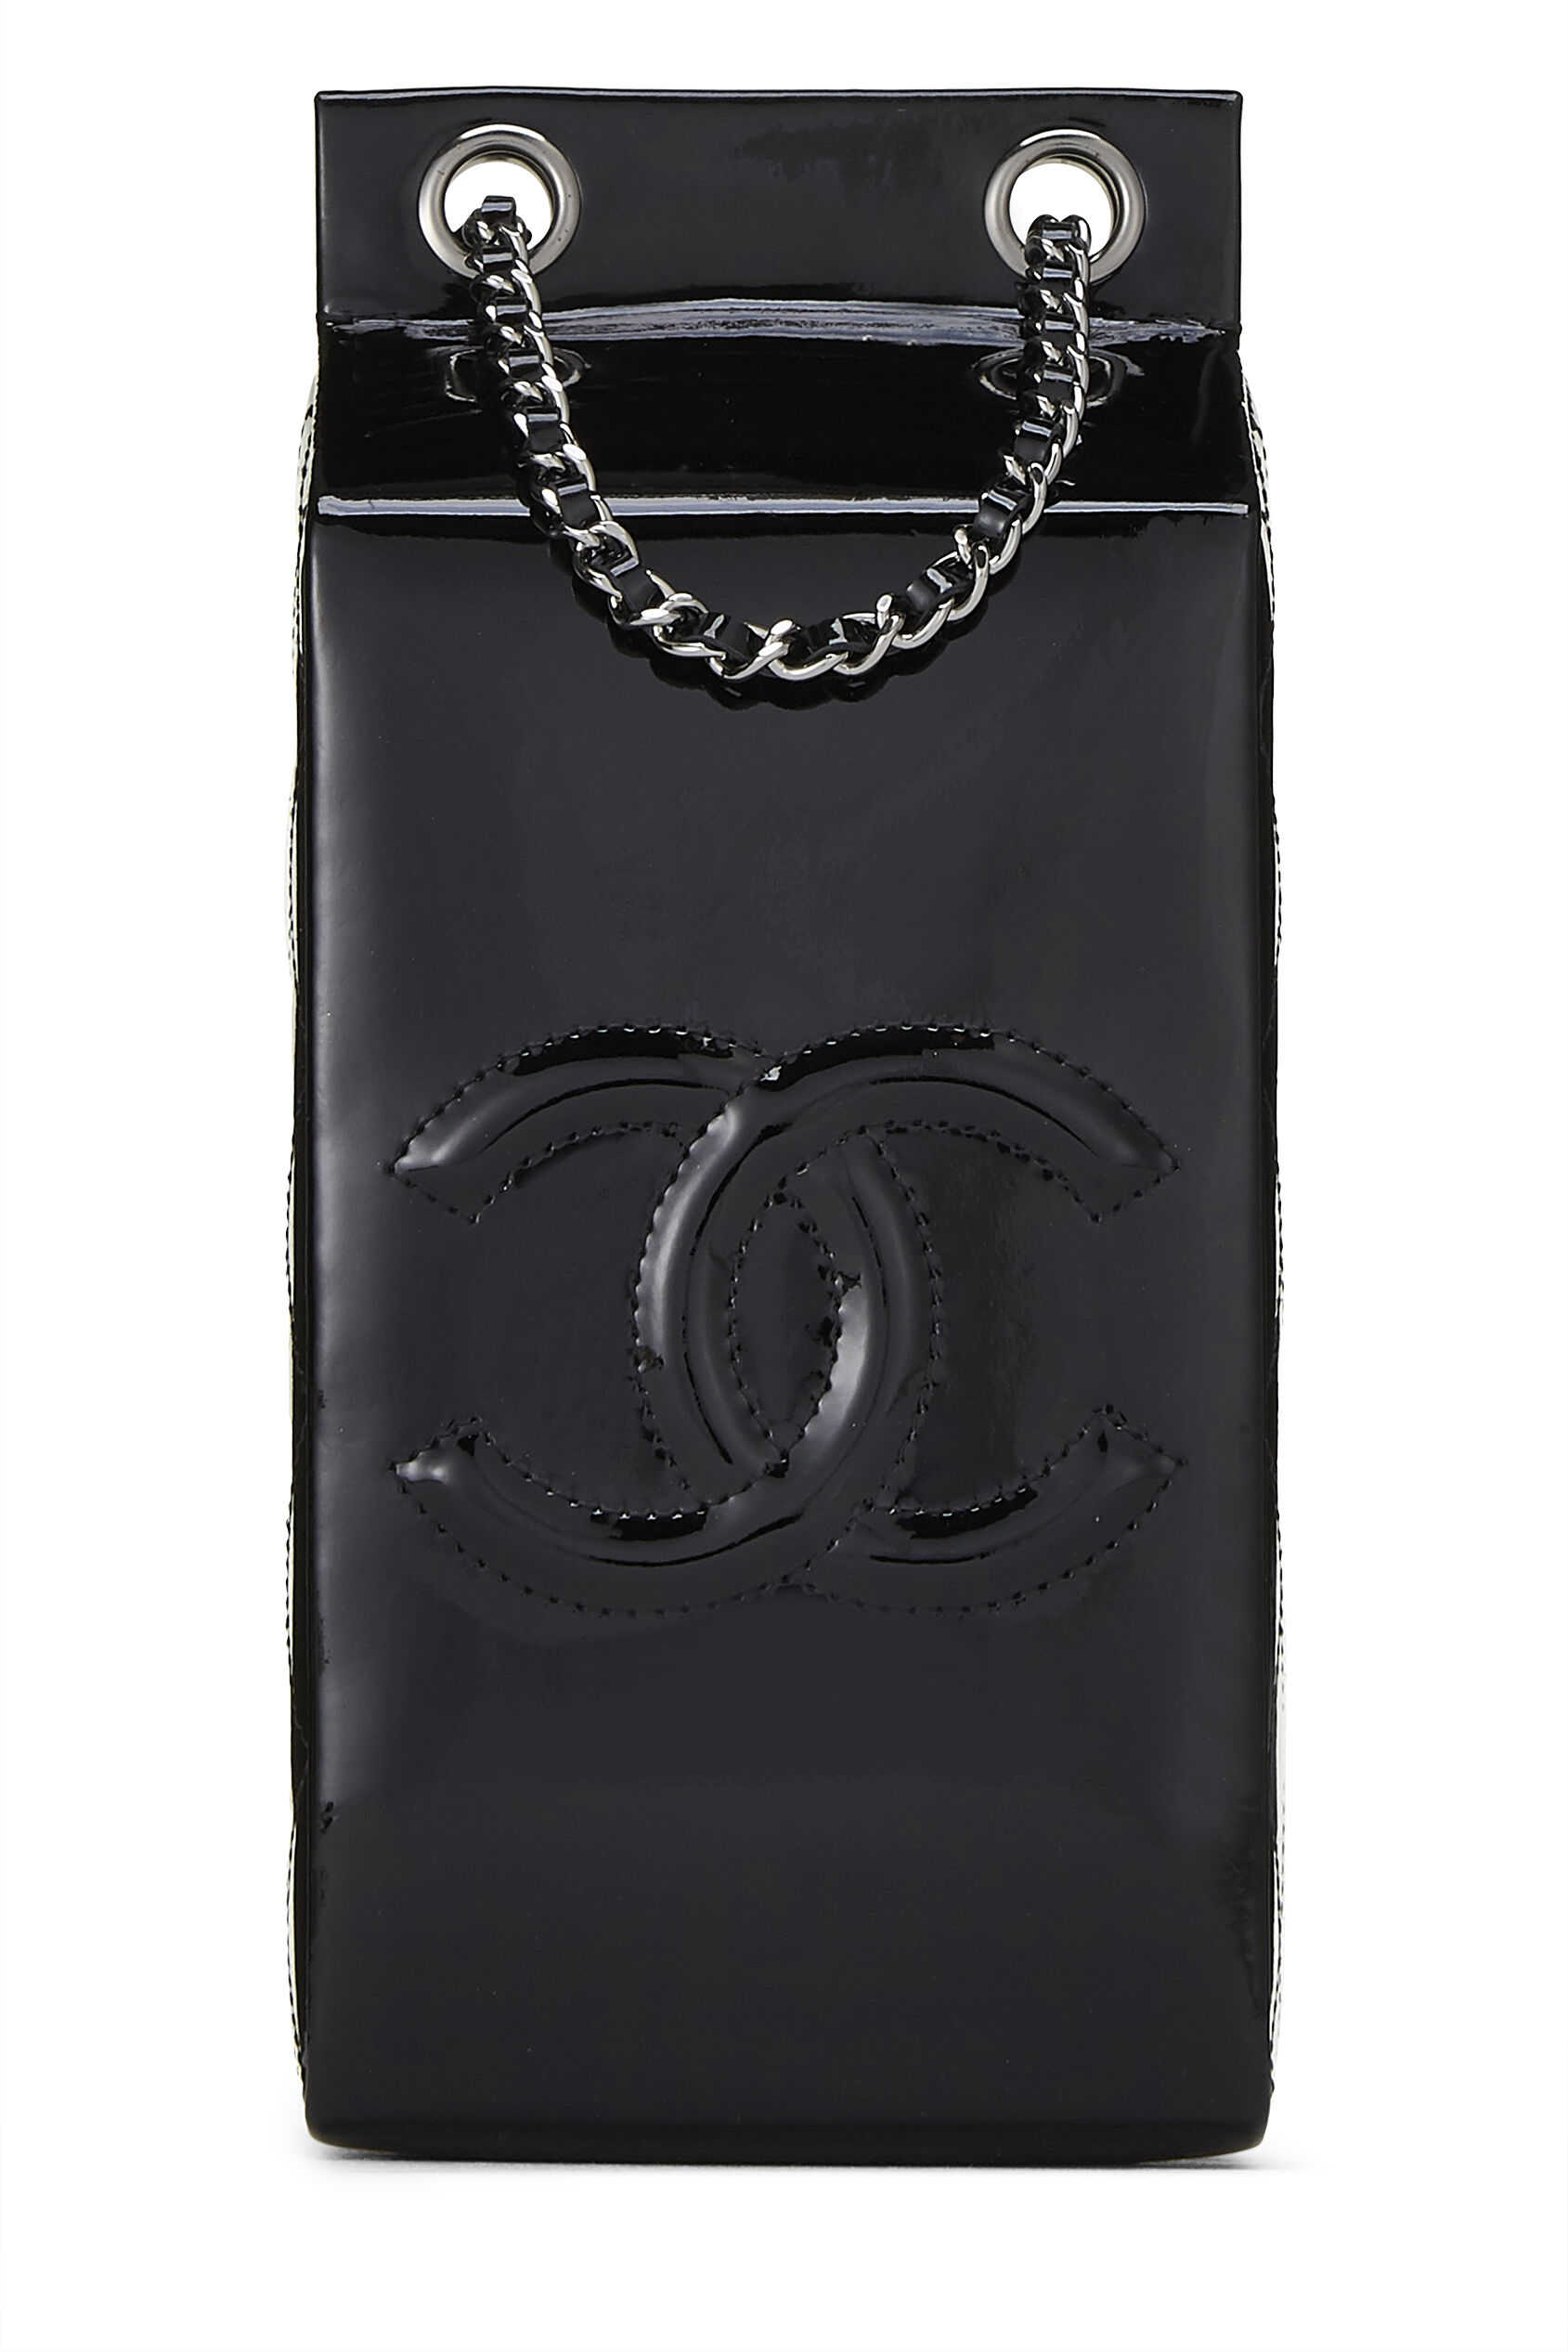 Chanel - Black Patent Leather Milk Carton Bag